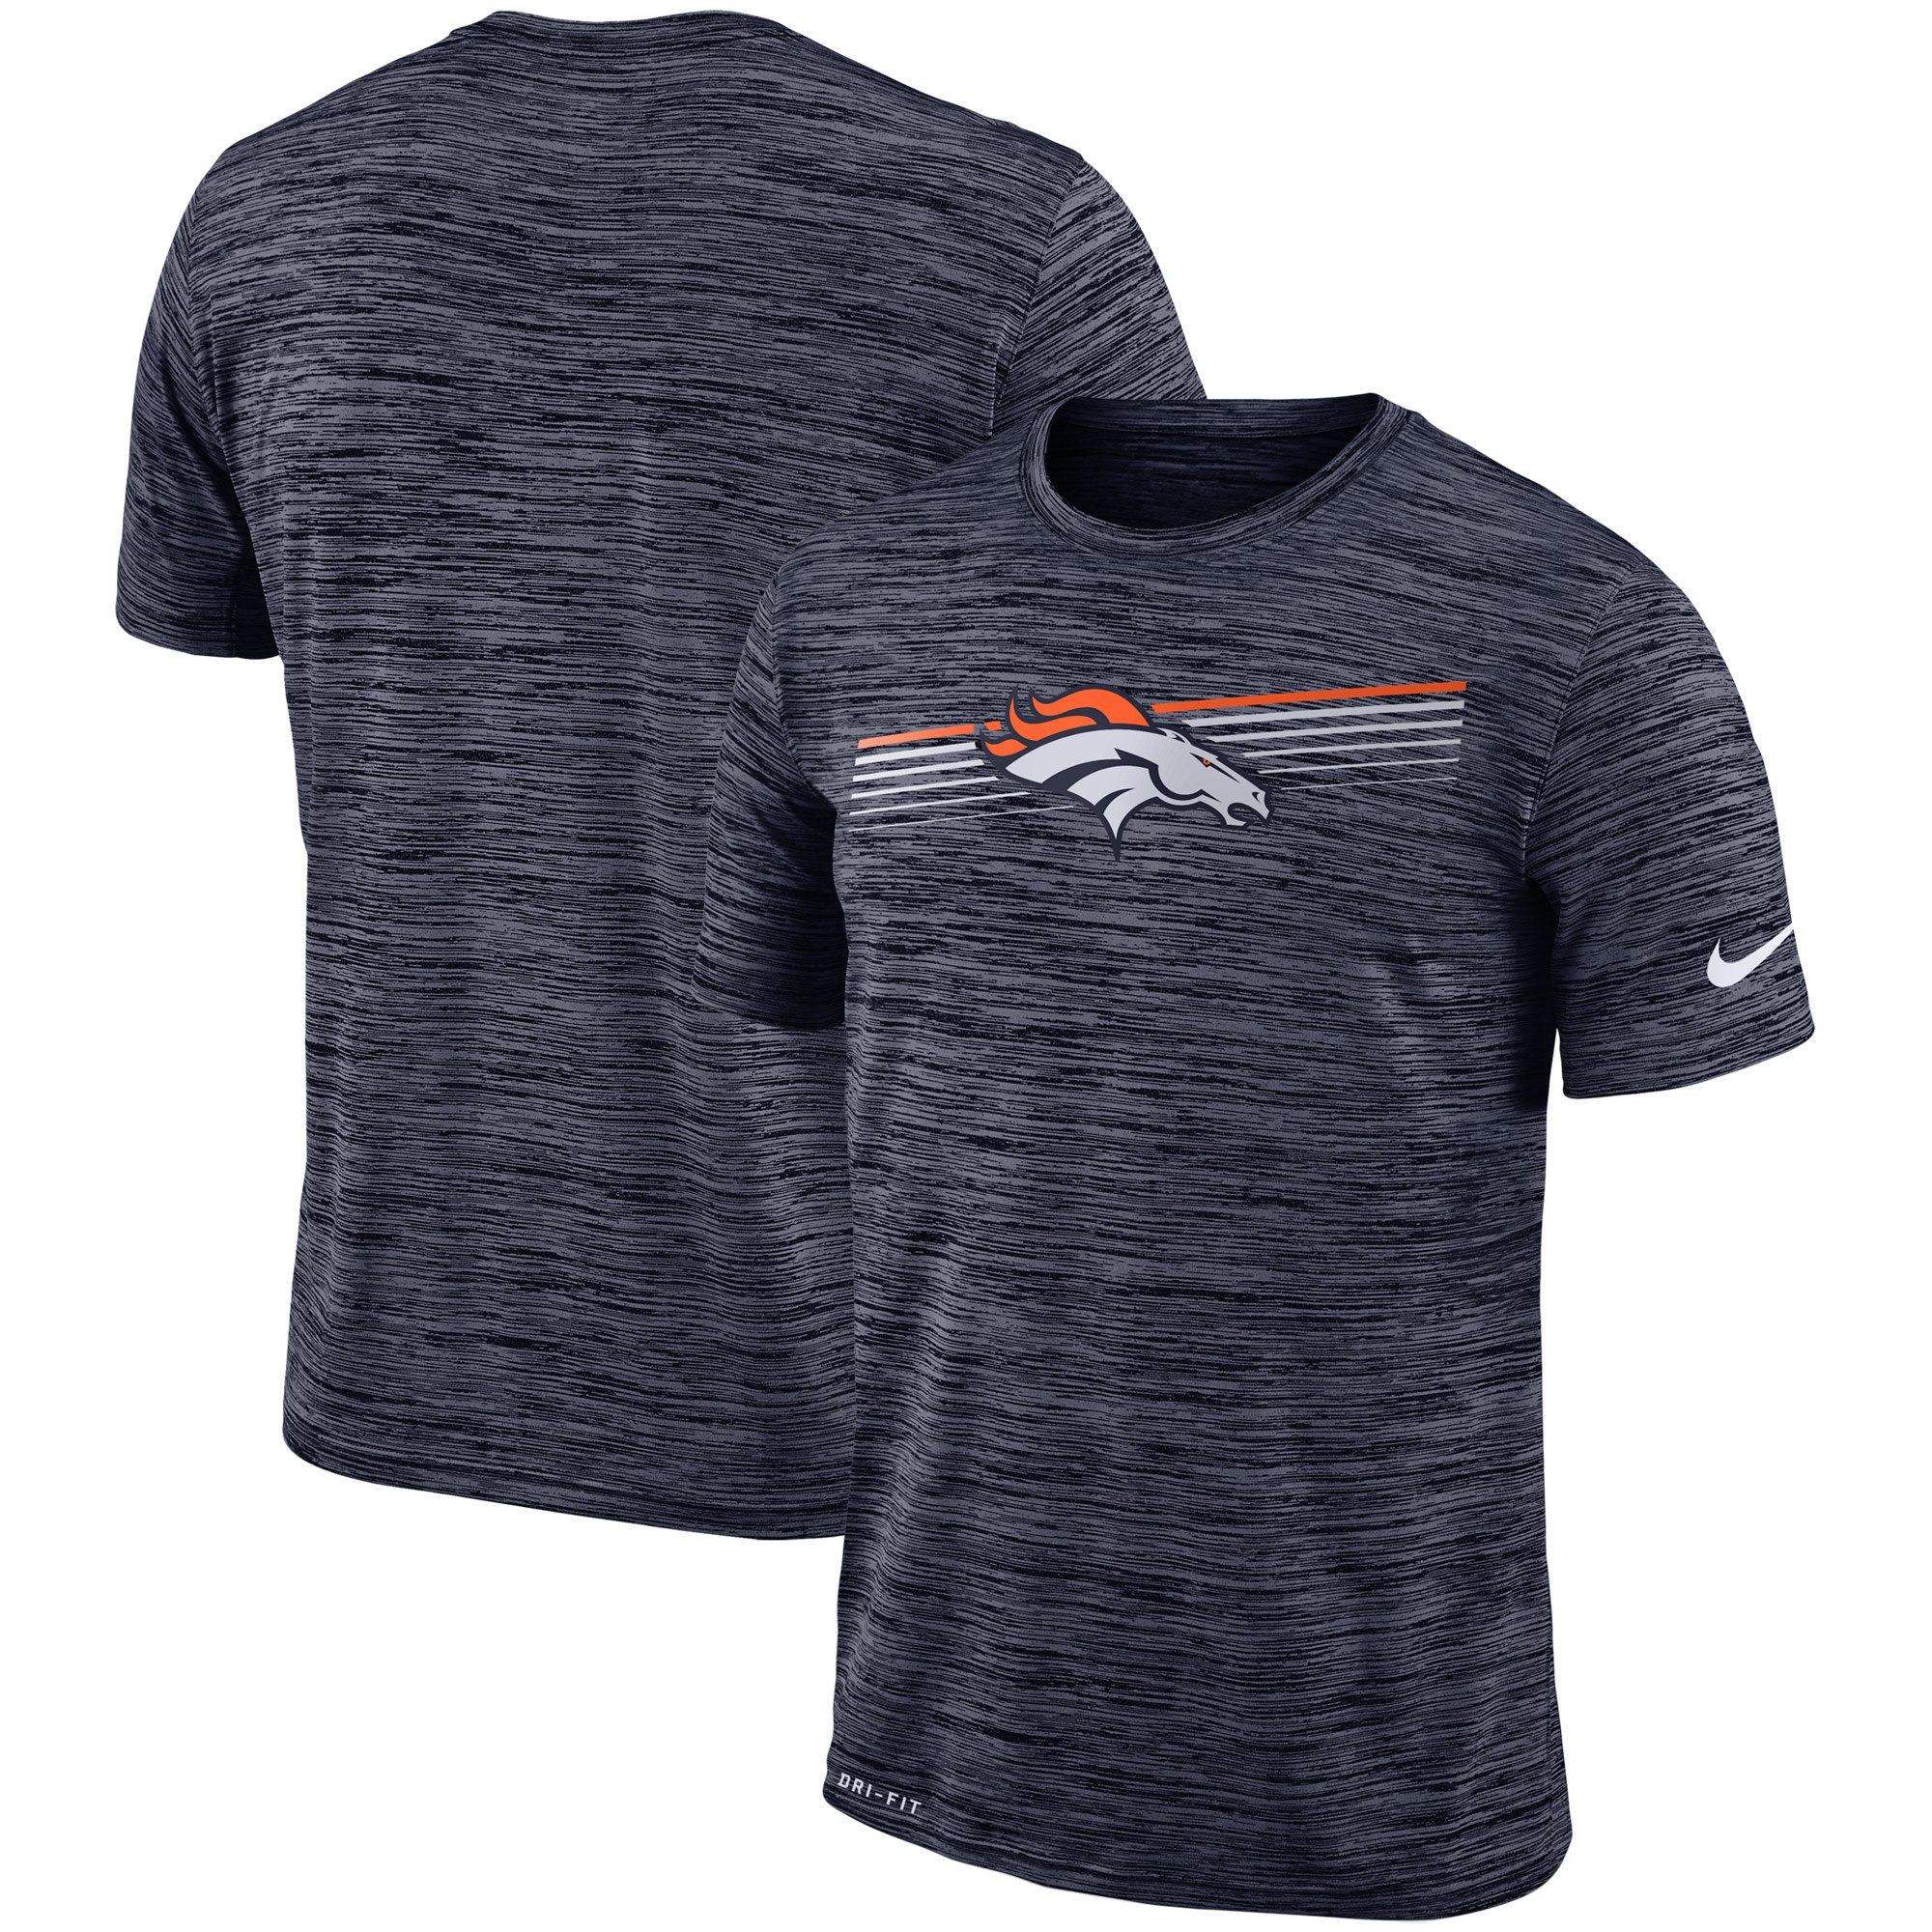 Denver Broncos Nike Sideline Velocity Performance T-Shirt Heathered Navy